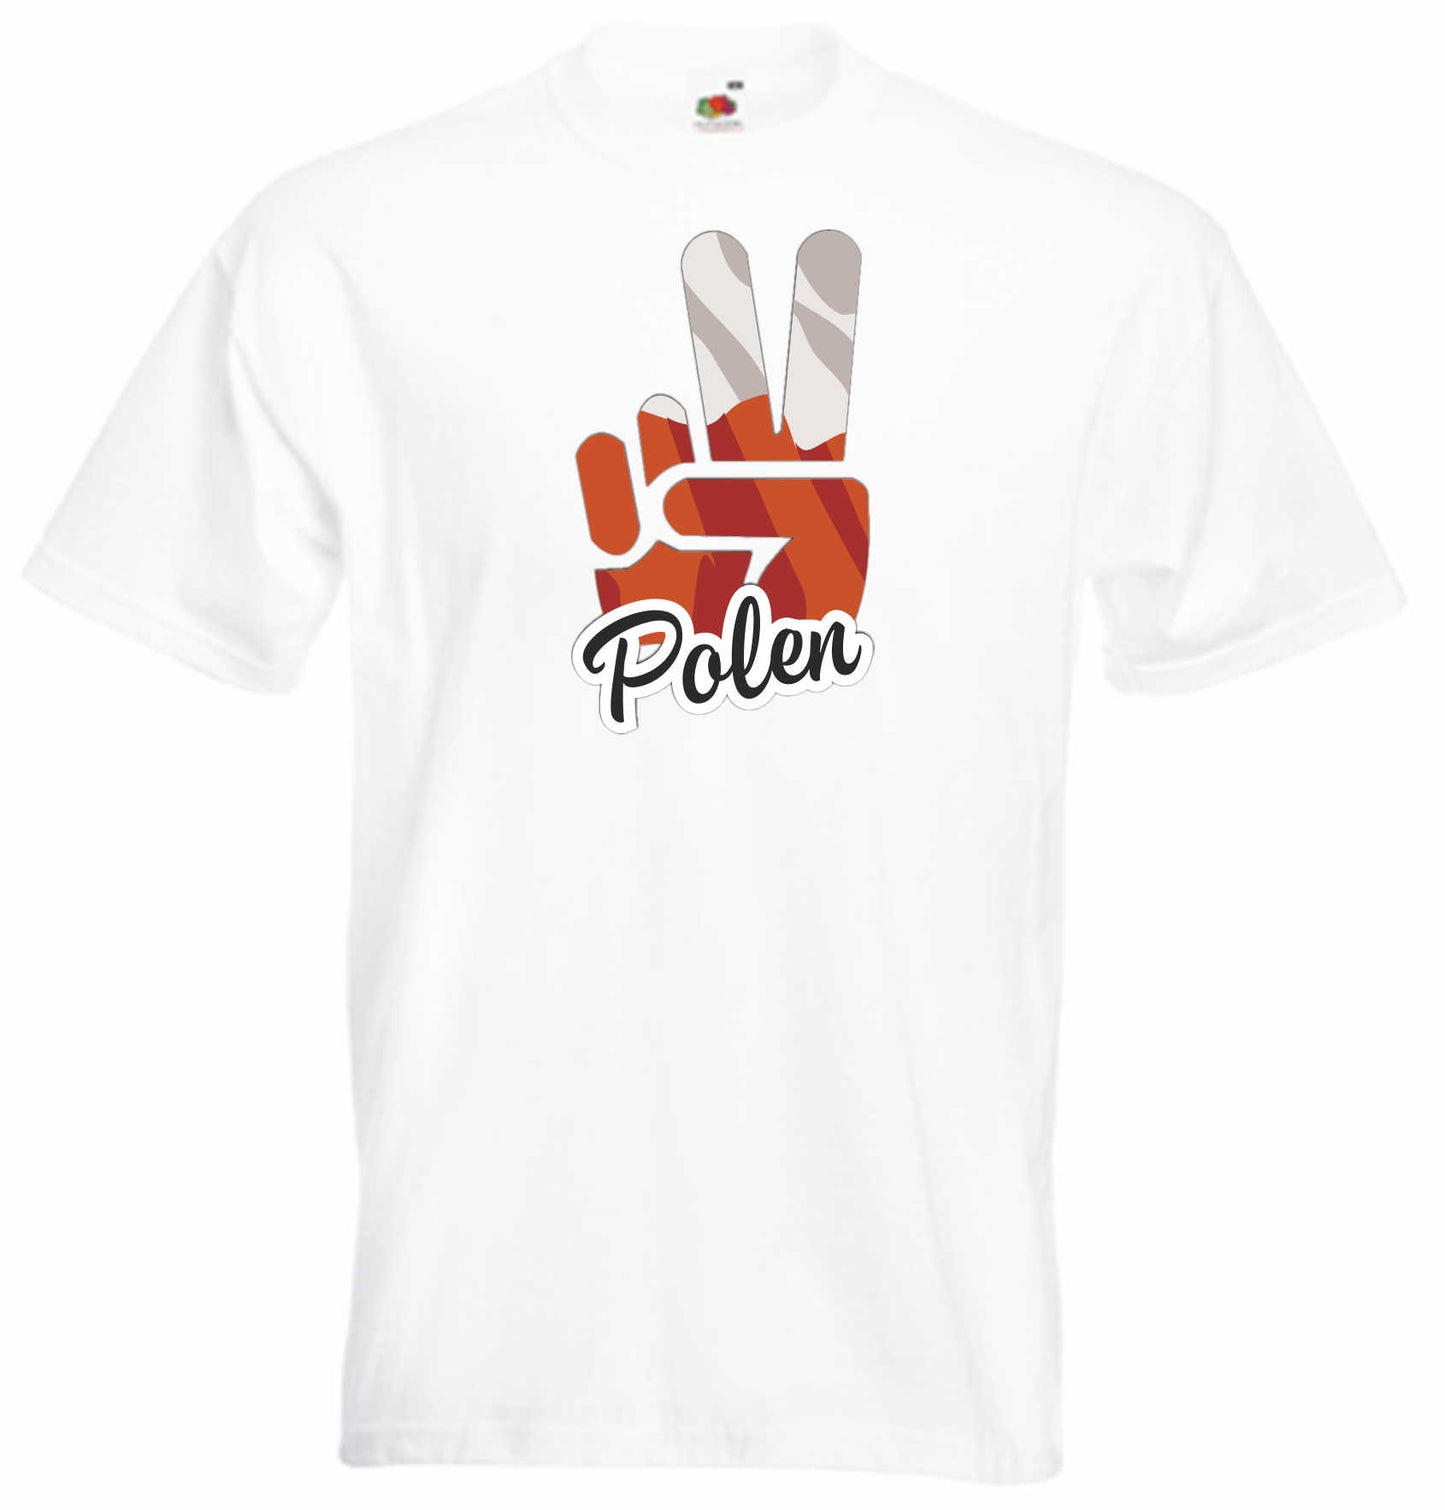 T-Shirt Herren - Victory - Flagge / Fahne - Polen - Sieg